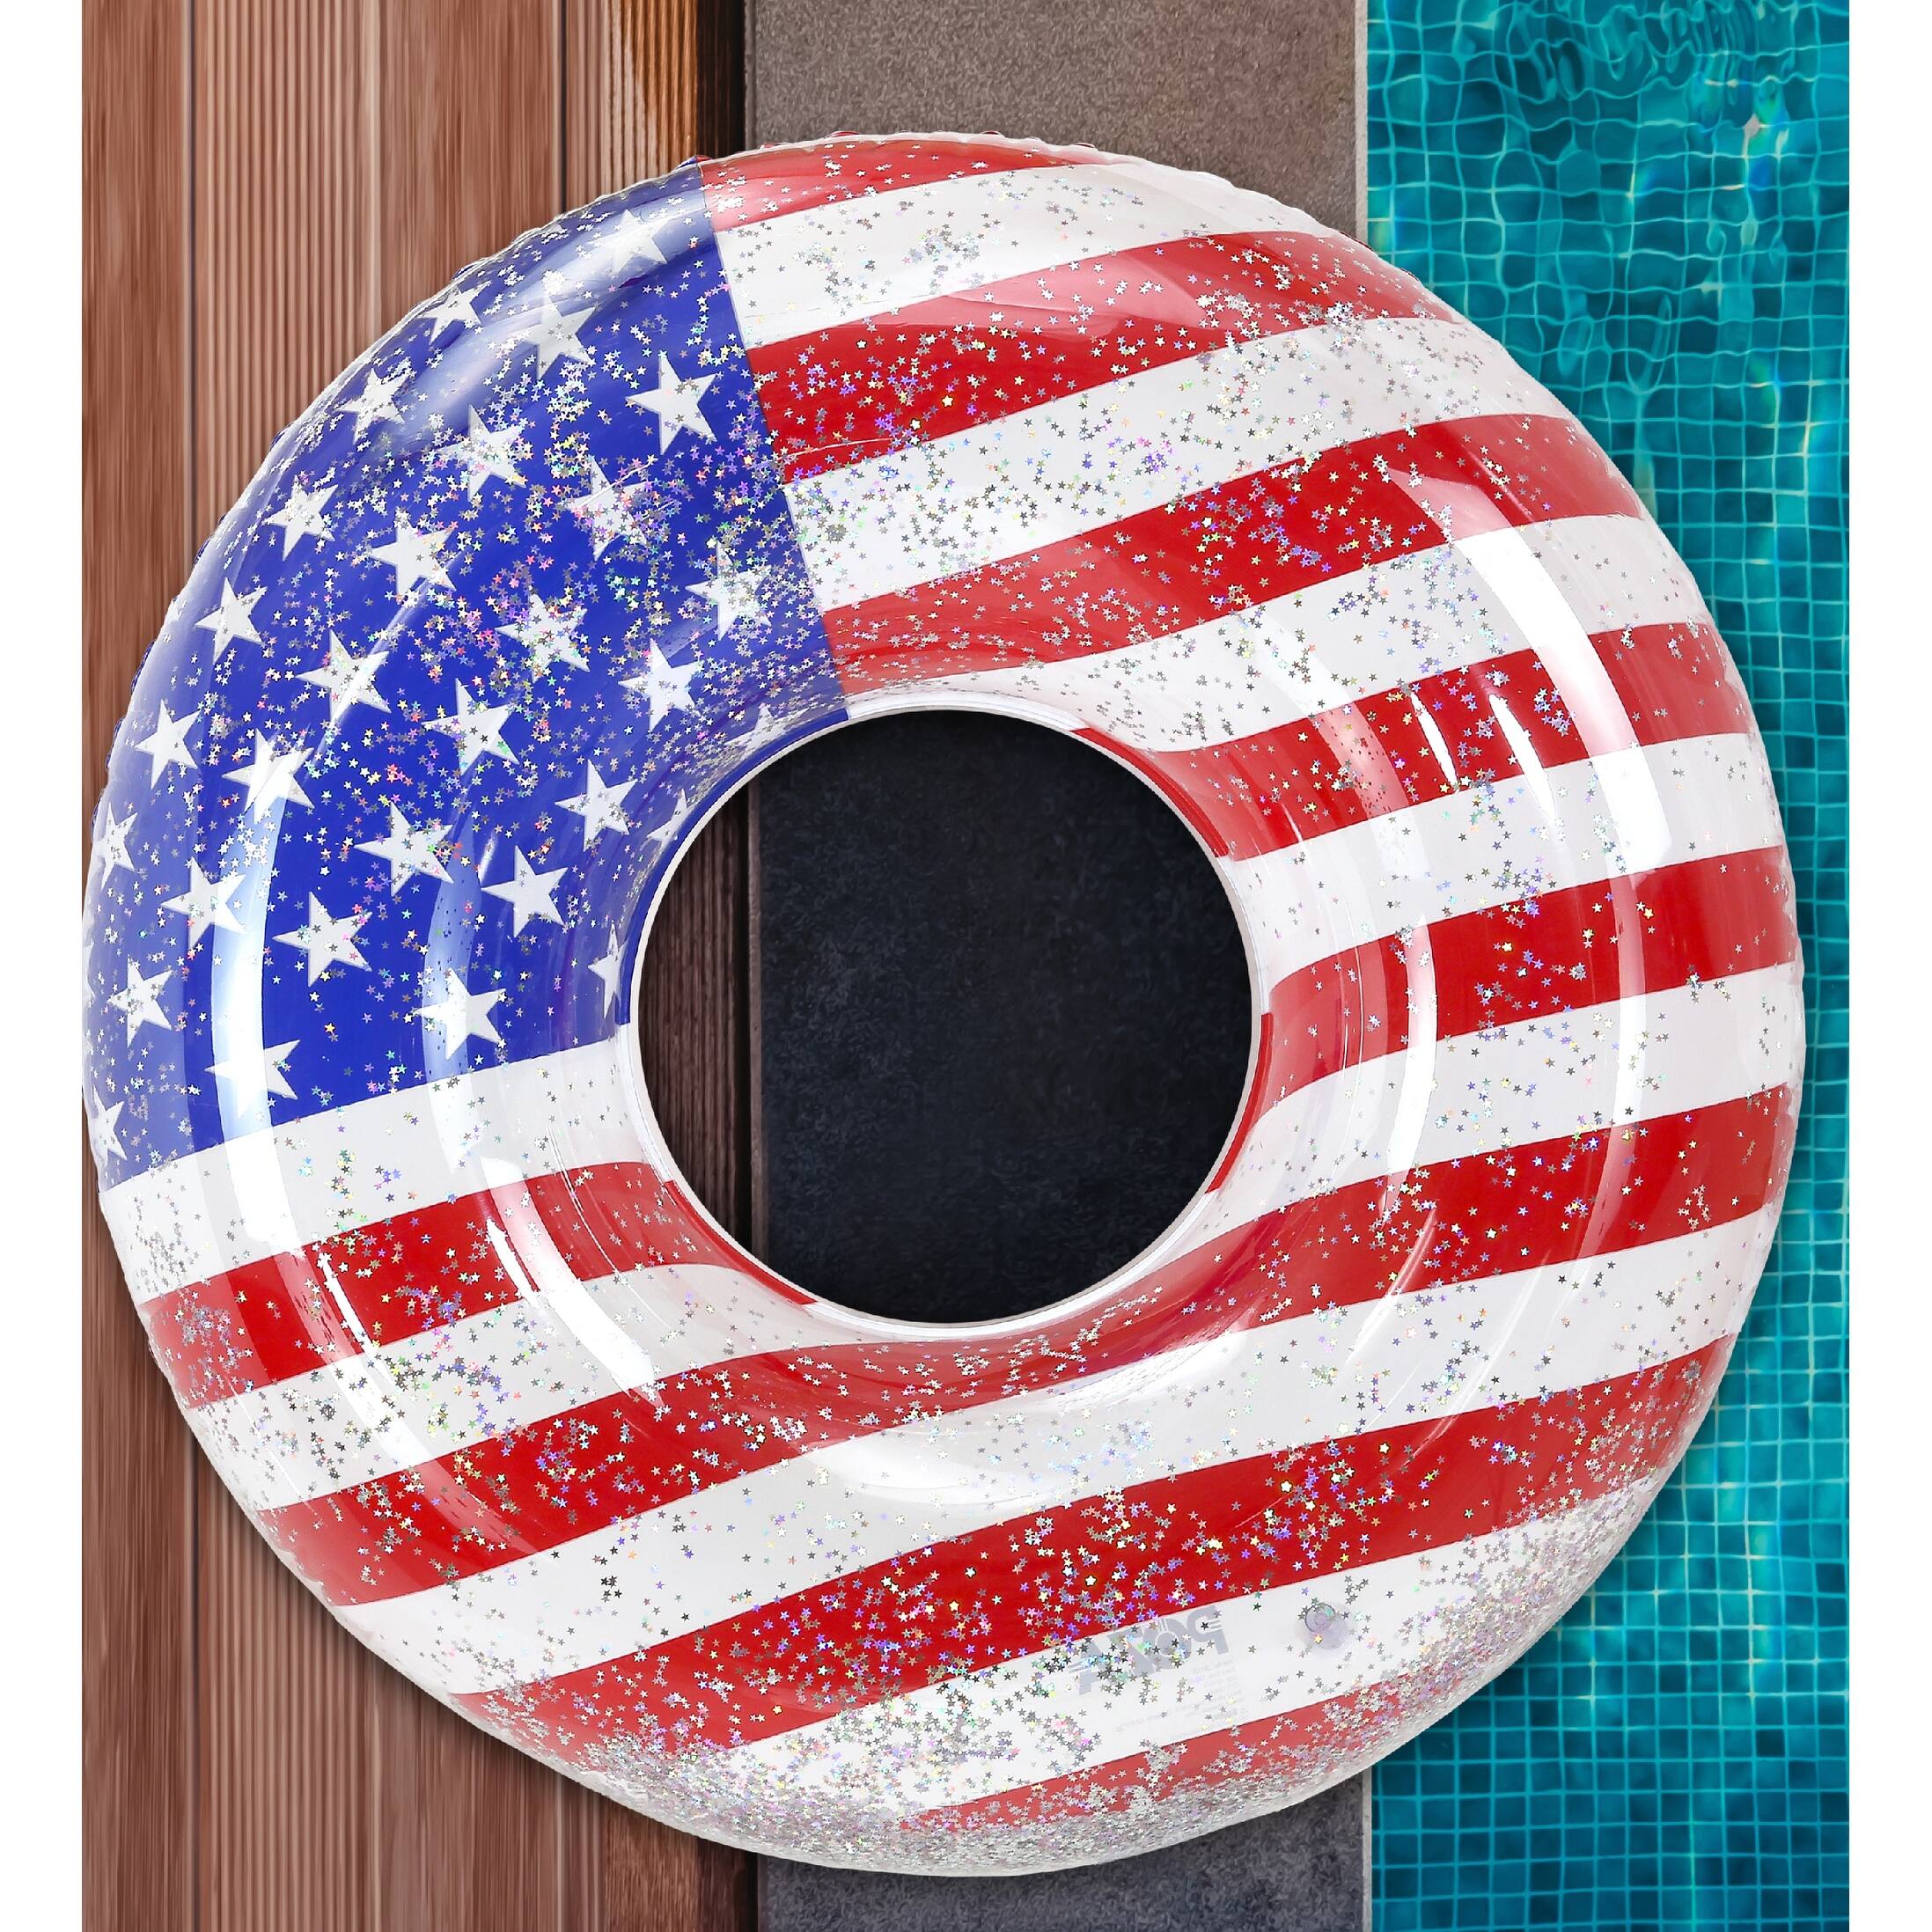 POZA Inflatable USA Flag Giant Pool Float Tube with Sparkle Confetti ...